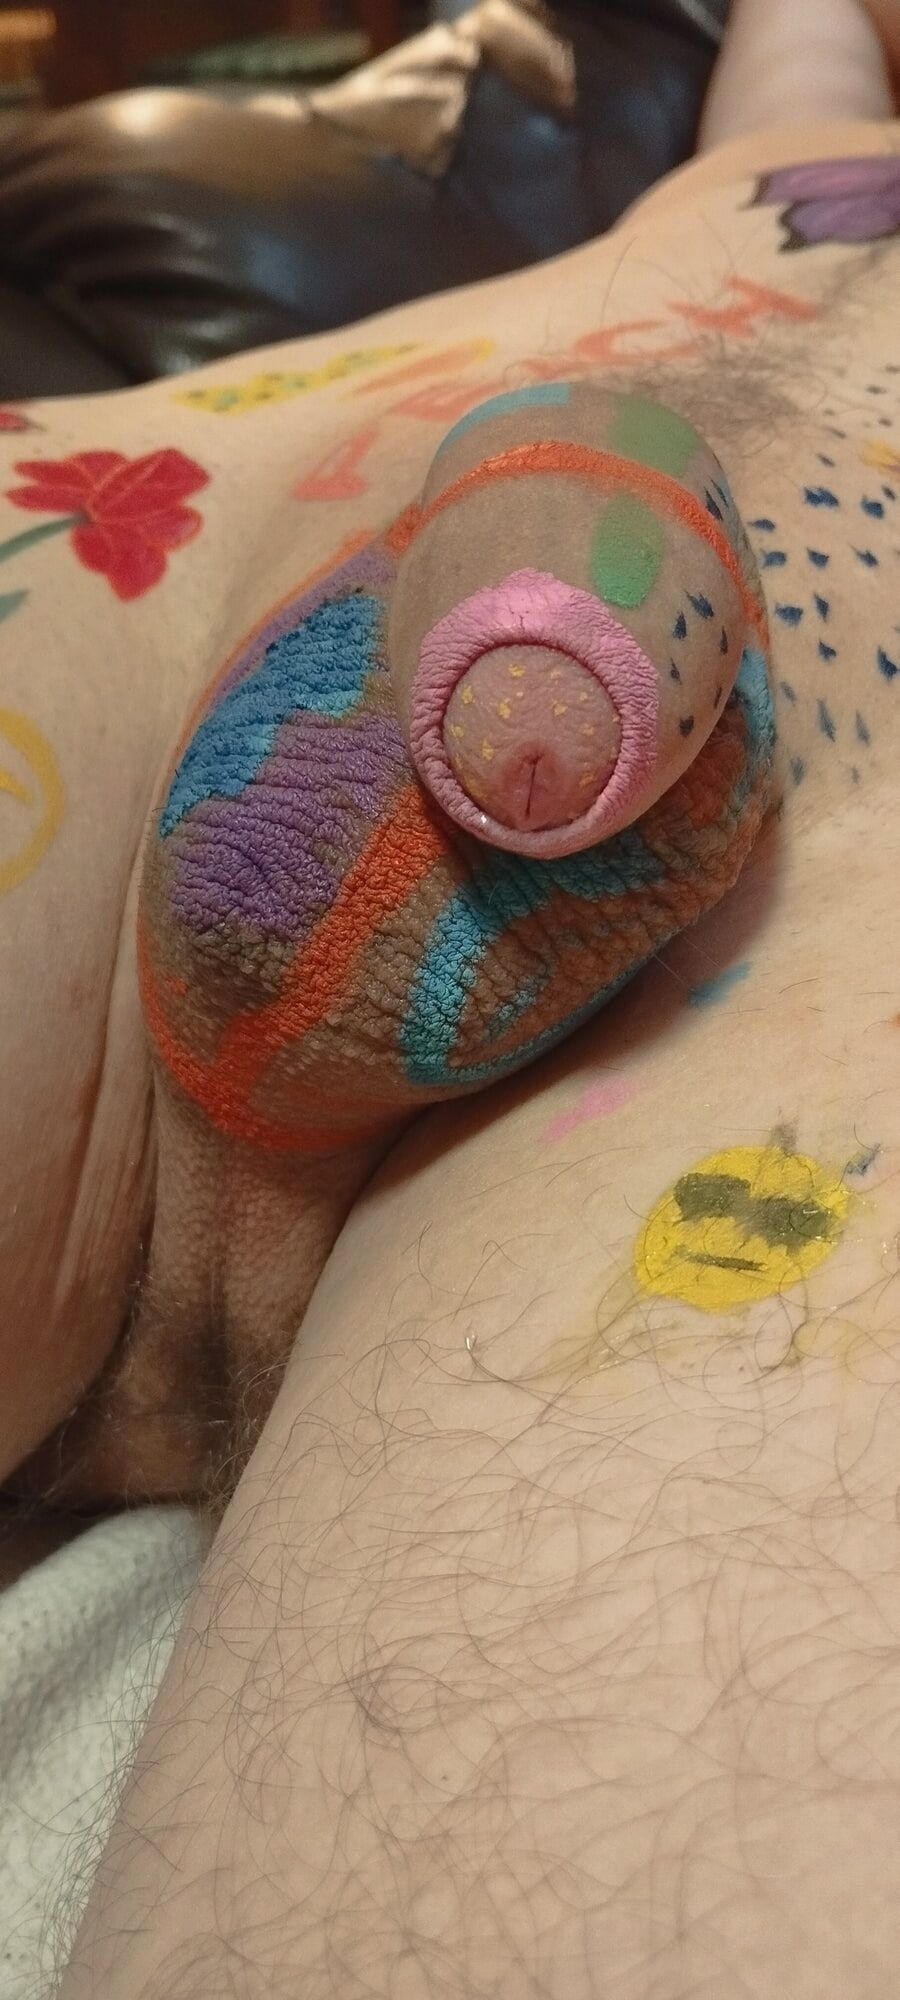 She painted my crotch #3